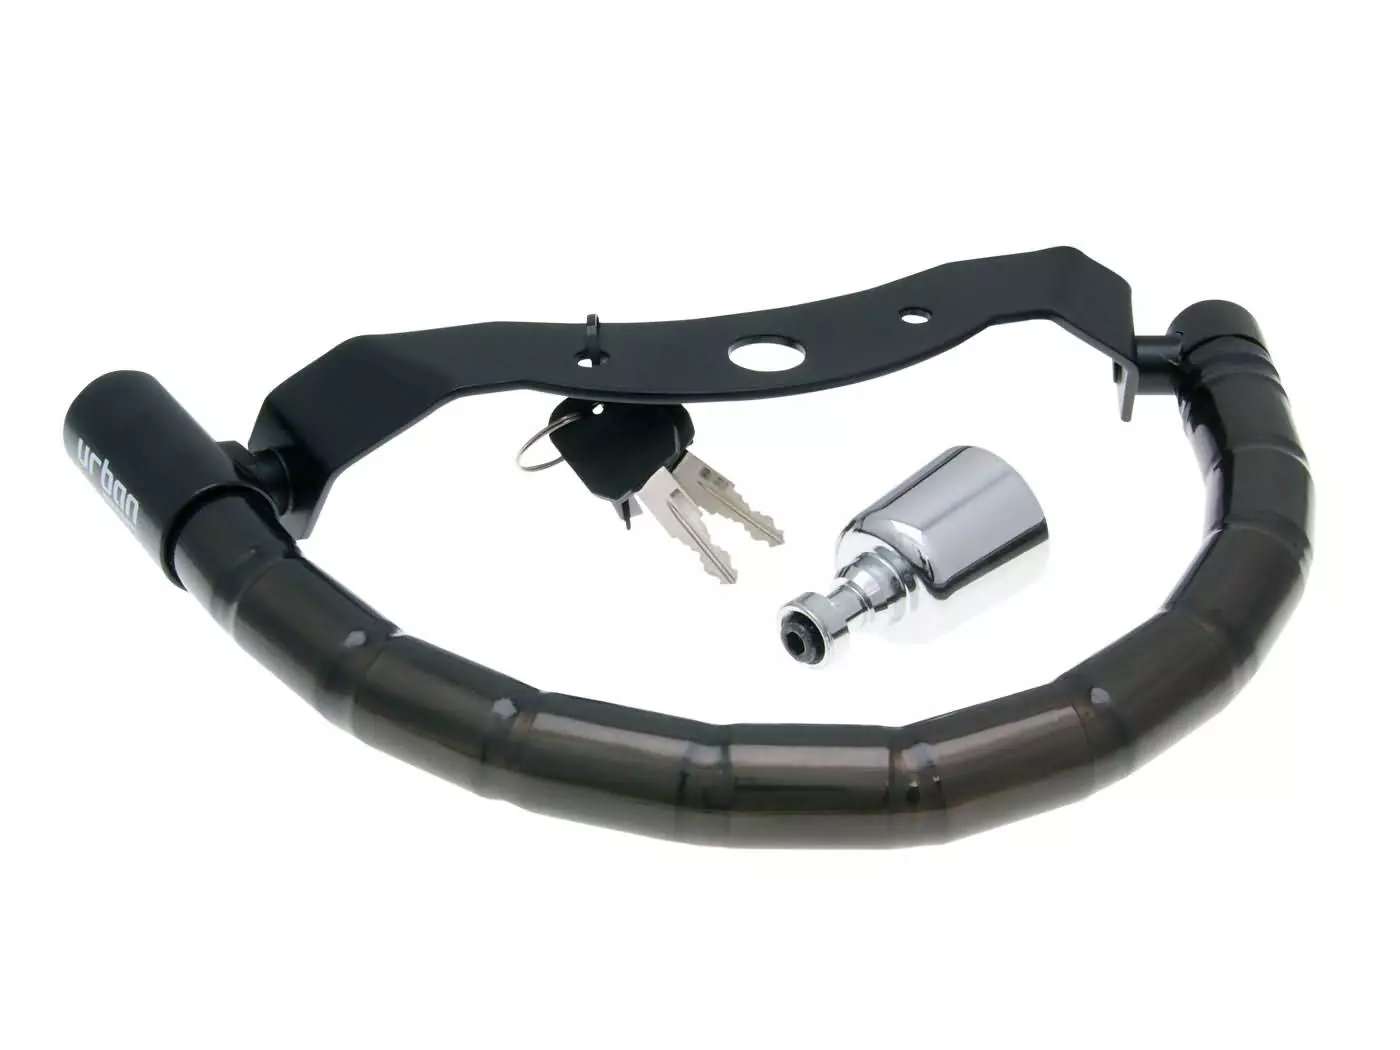 Dual Function Lock Scooter / Helmet Urban Security Practic For Peugeot Django 50, 125, 150 2014